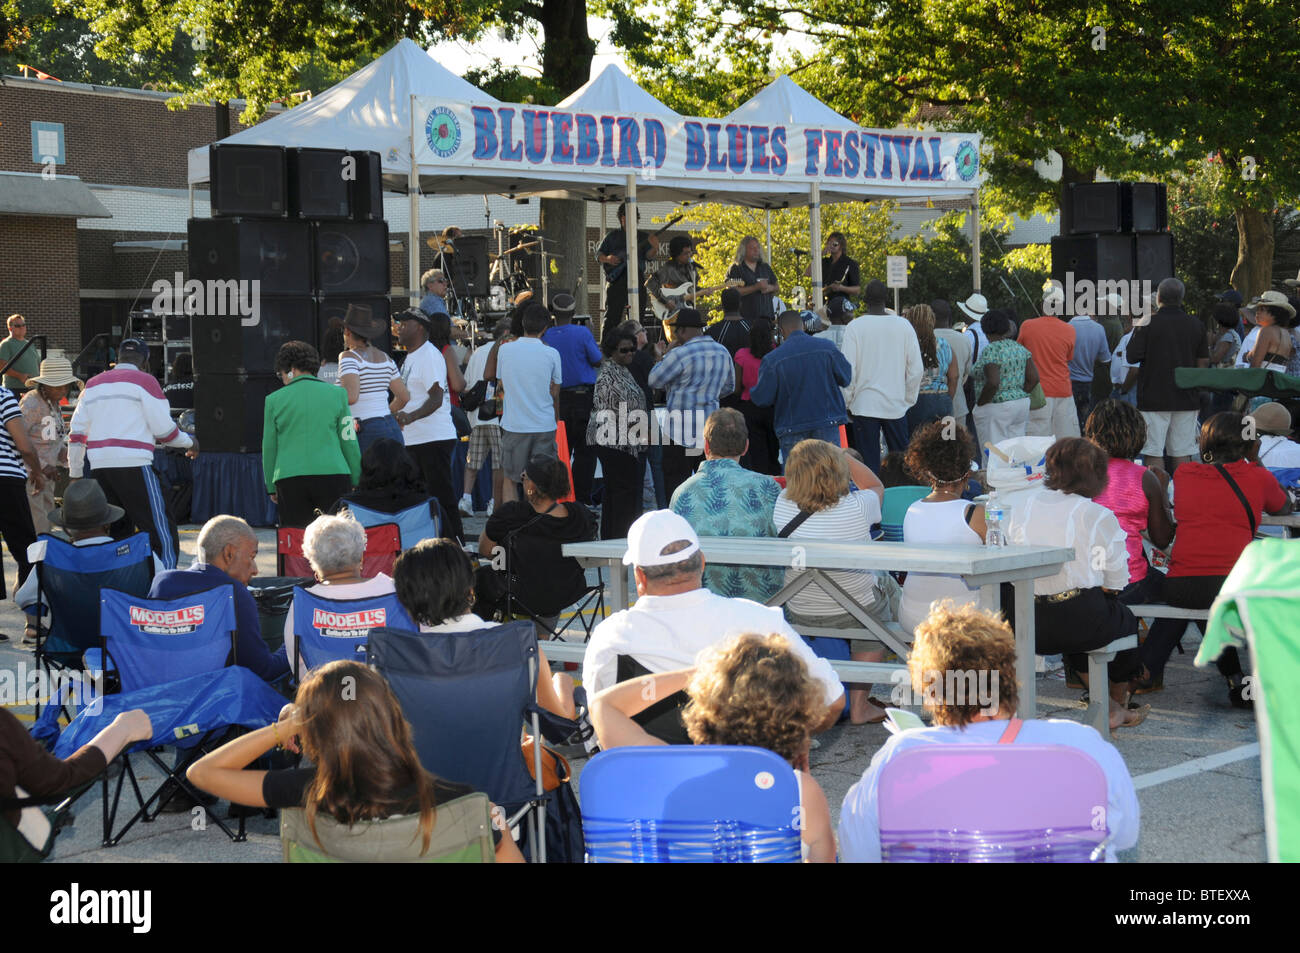 Bluebird Blues Festival in Largo, Maryland Stock Photo Alamy